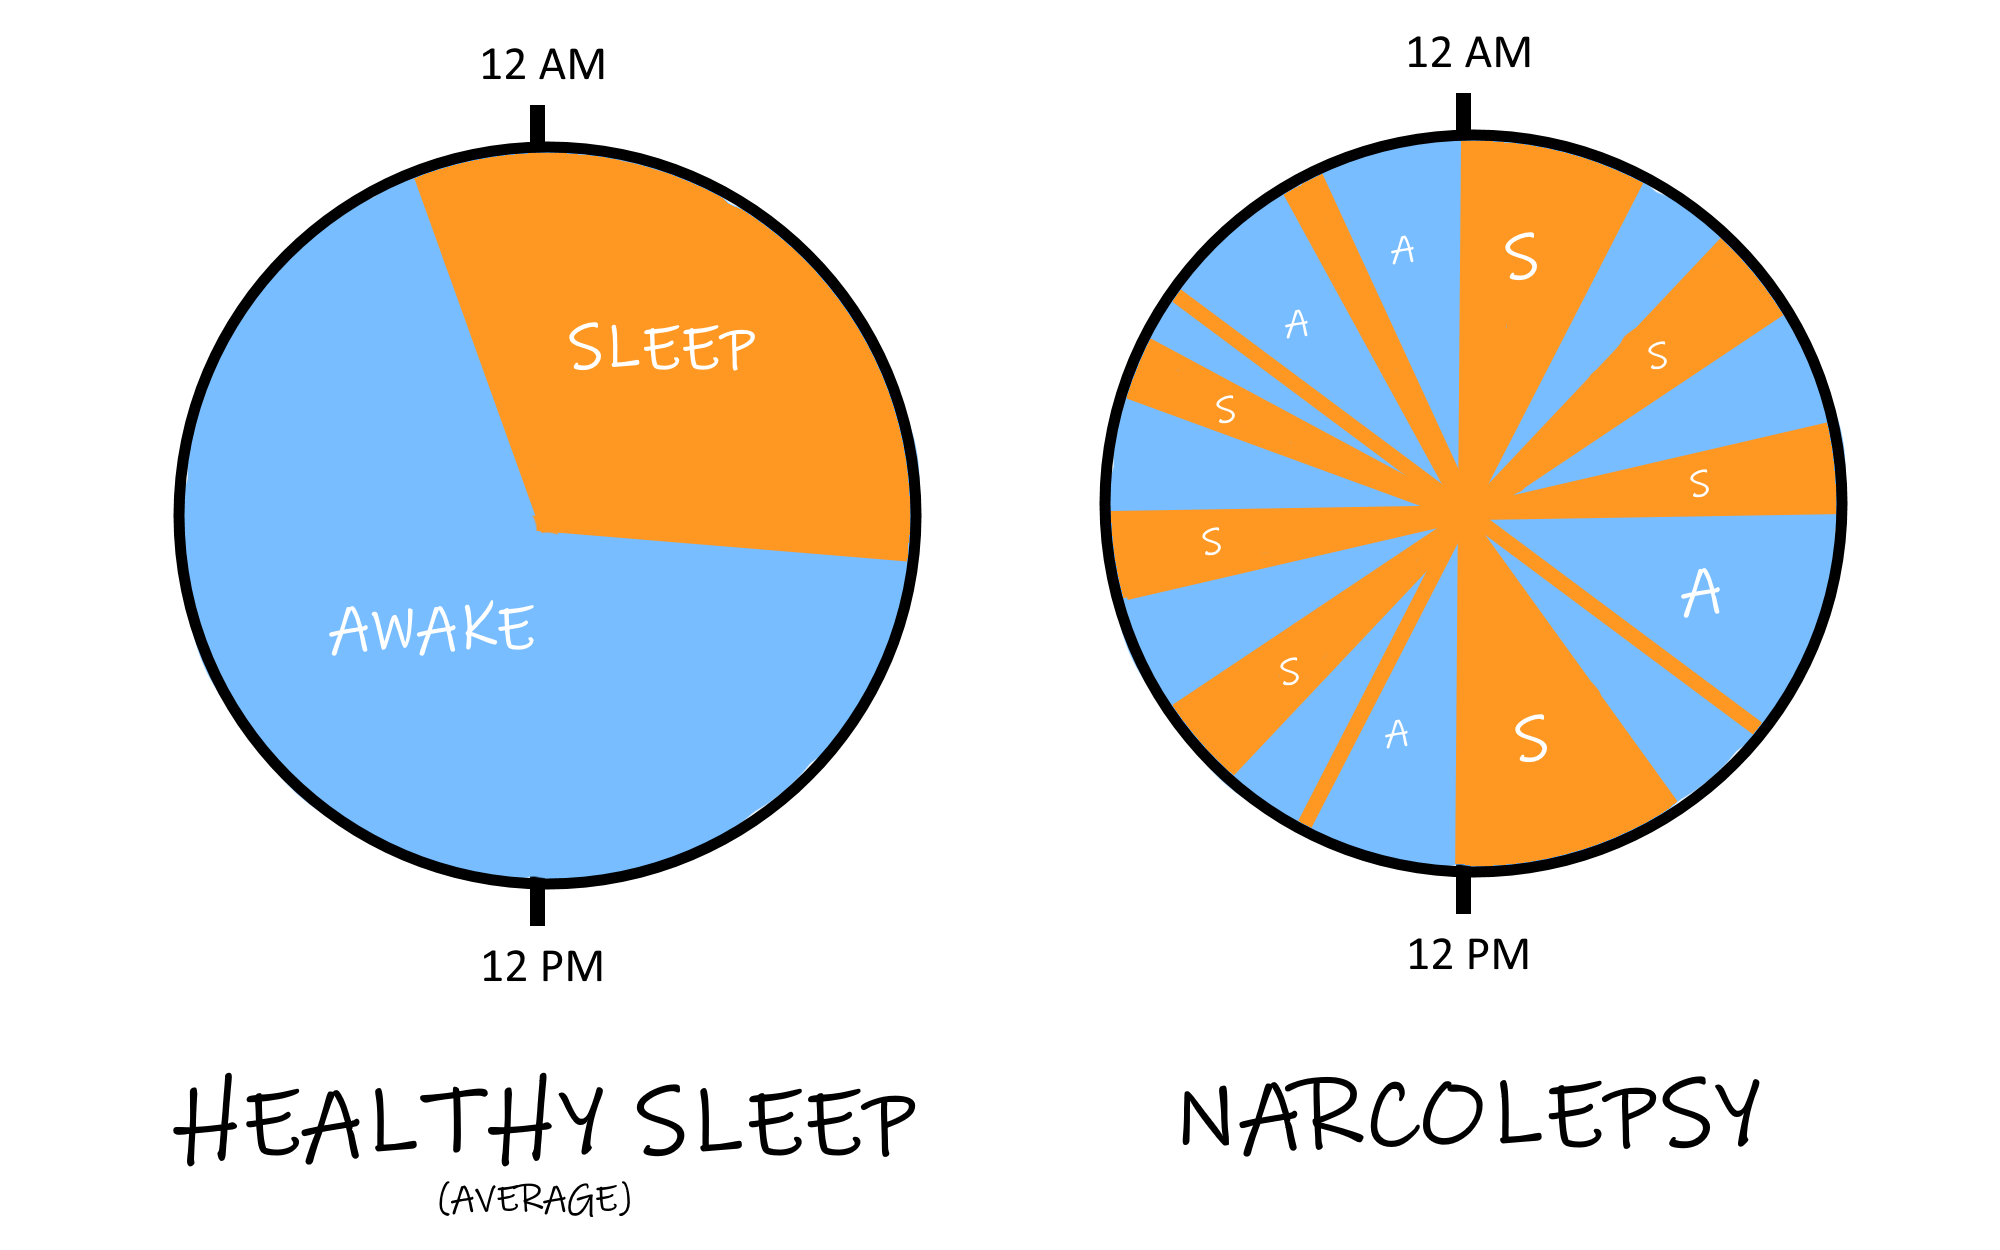 Sleeping cycle. Нарколепсия. Polyphasic Sleep Cycle. Sleep Cycle график. Sleep circle.